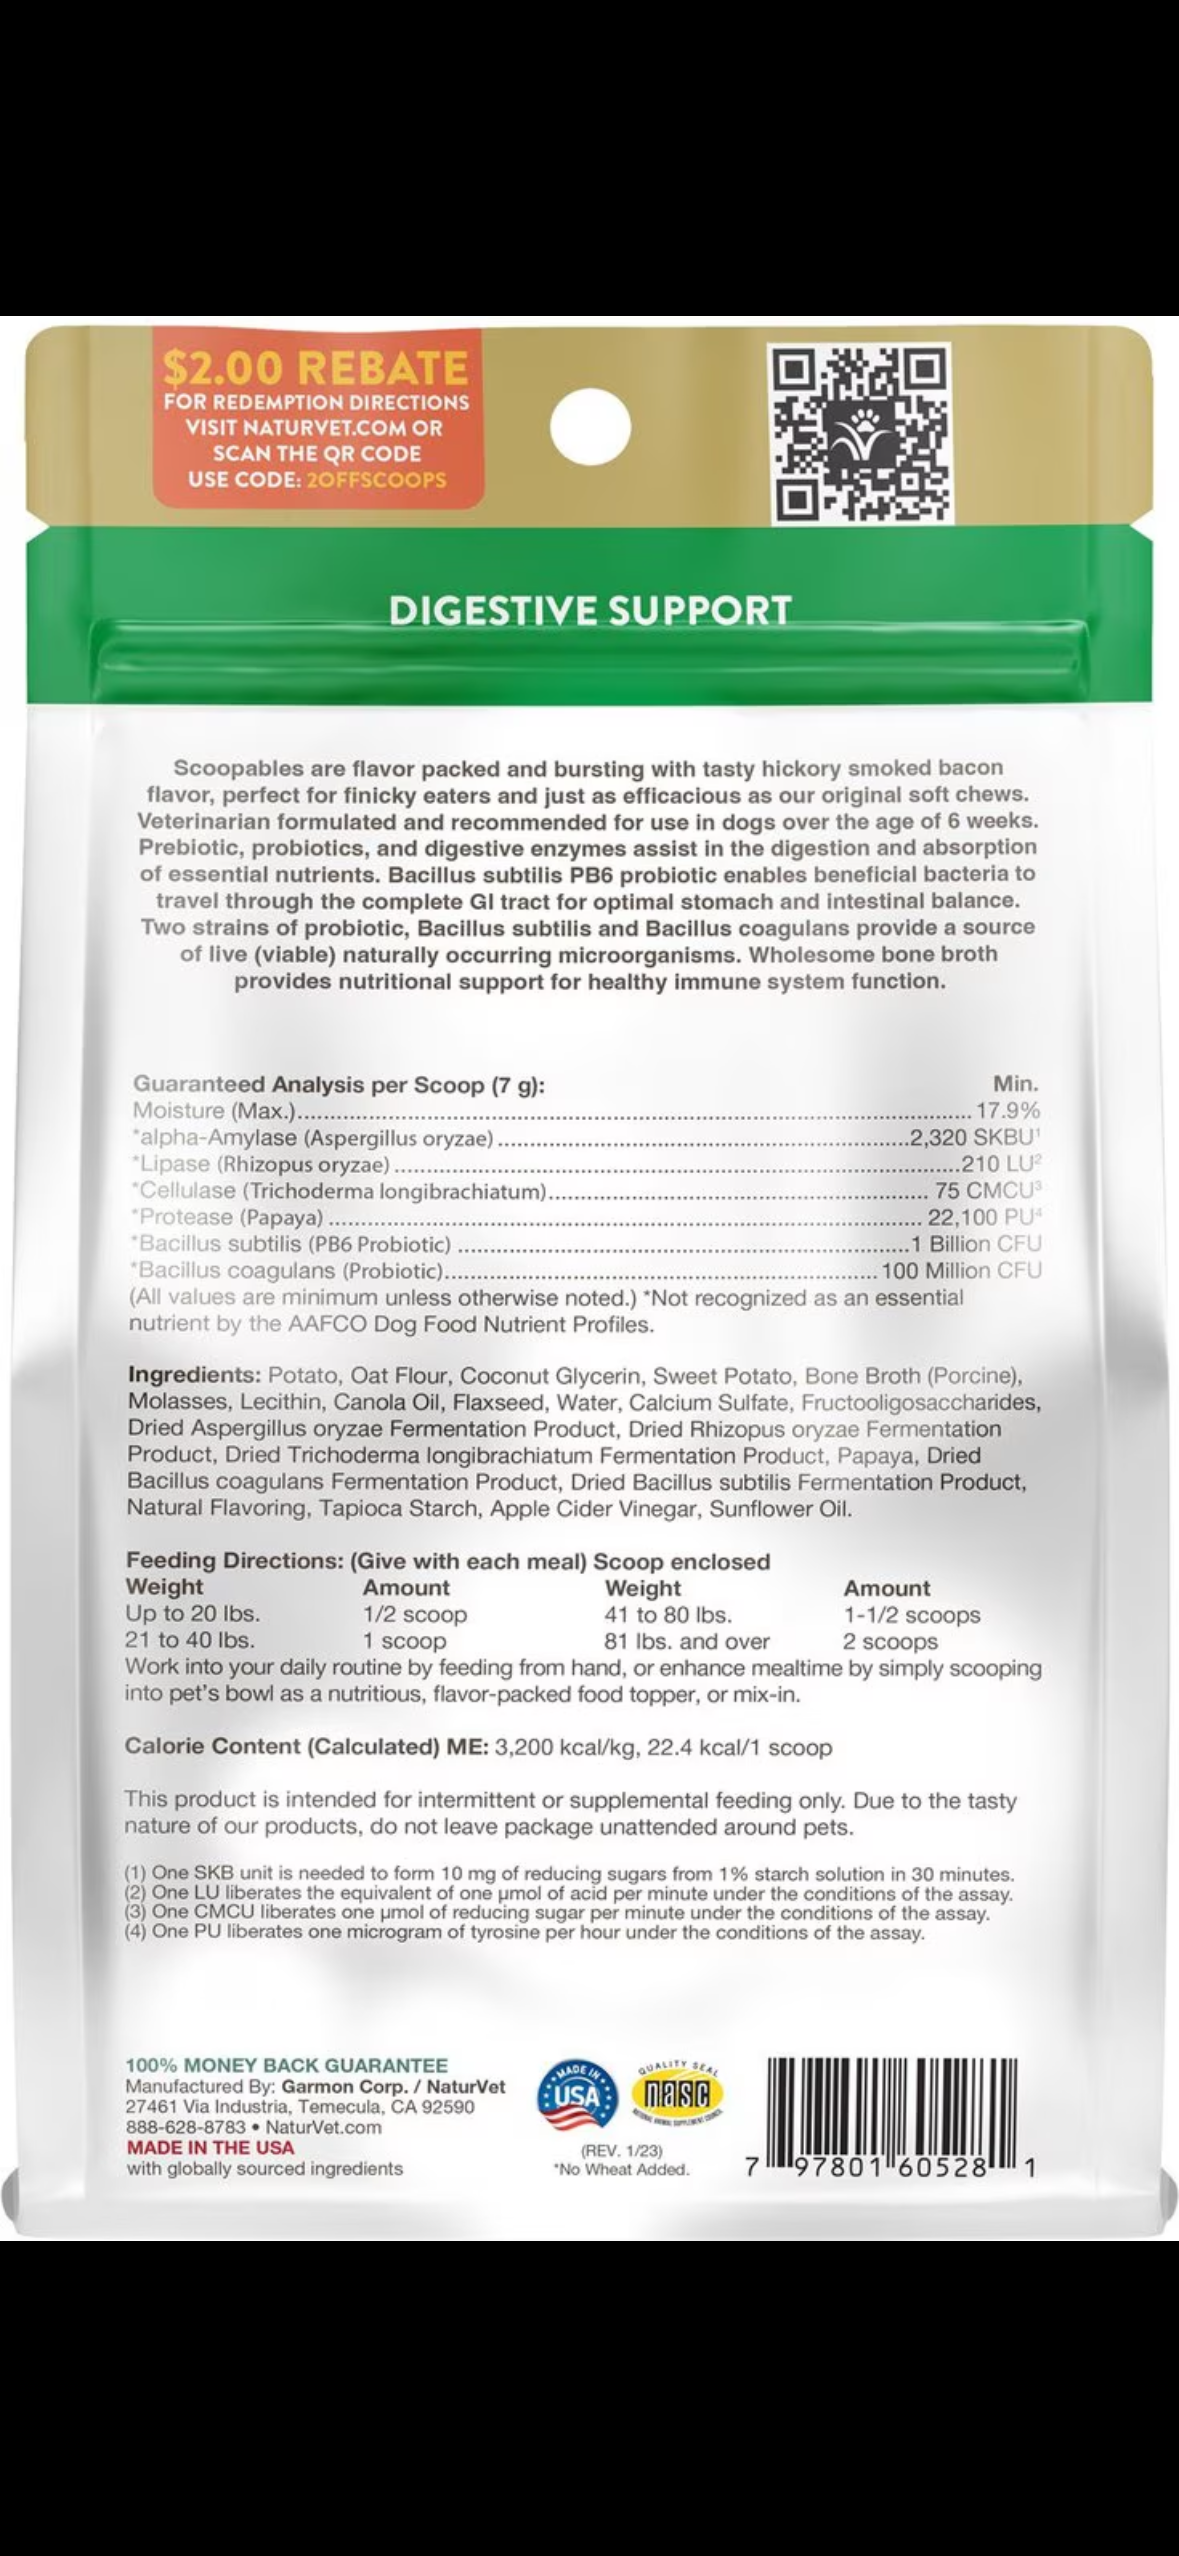 "NaturVet Advanced Probiotics & Enzymes (Supplement)